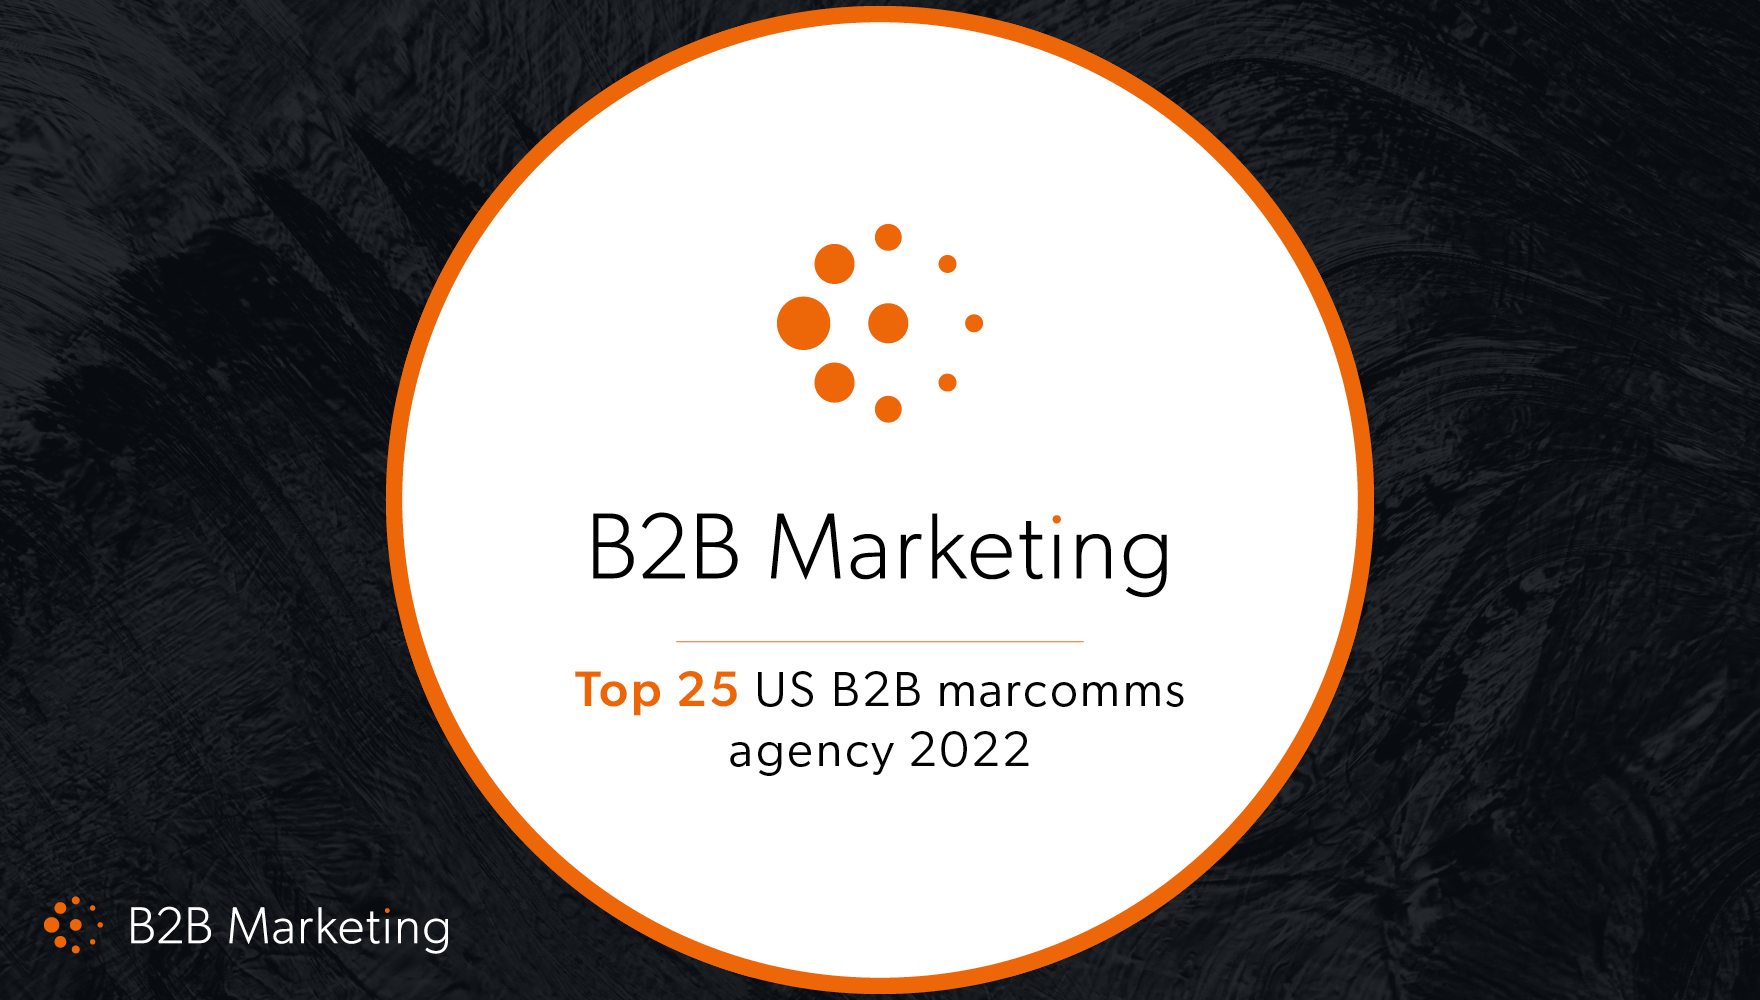 B2B Marketing top 25 US B2B marcomms agency 2022